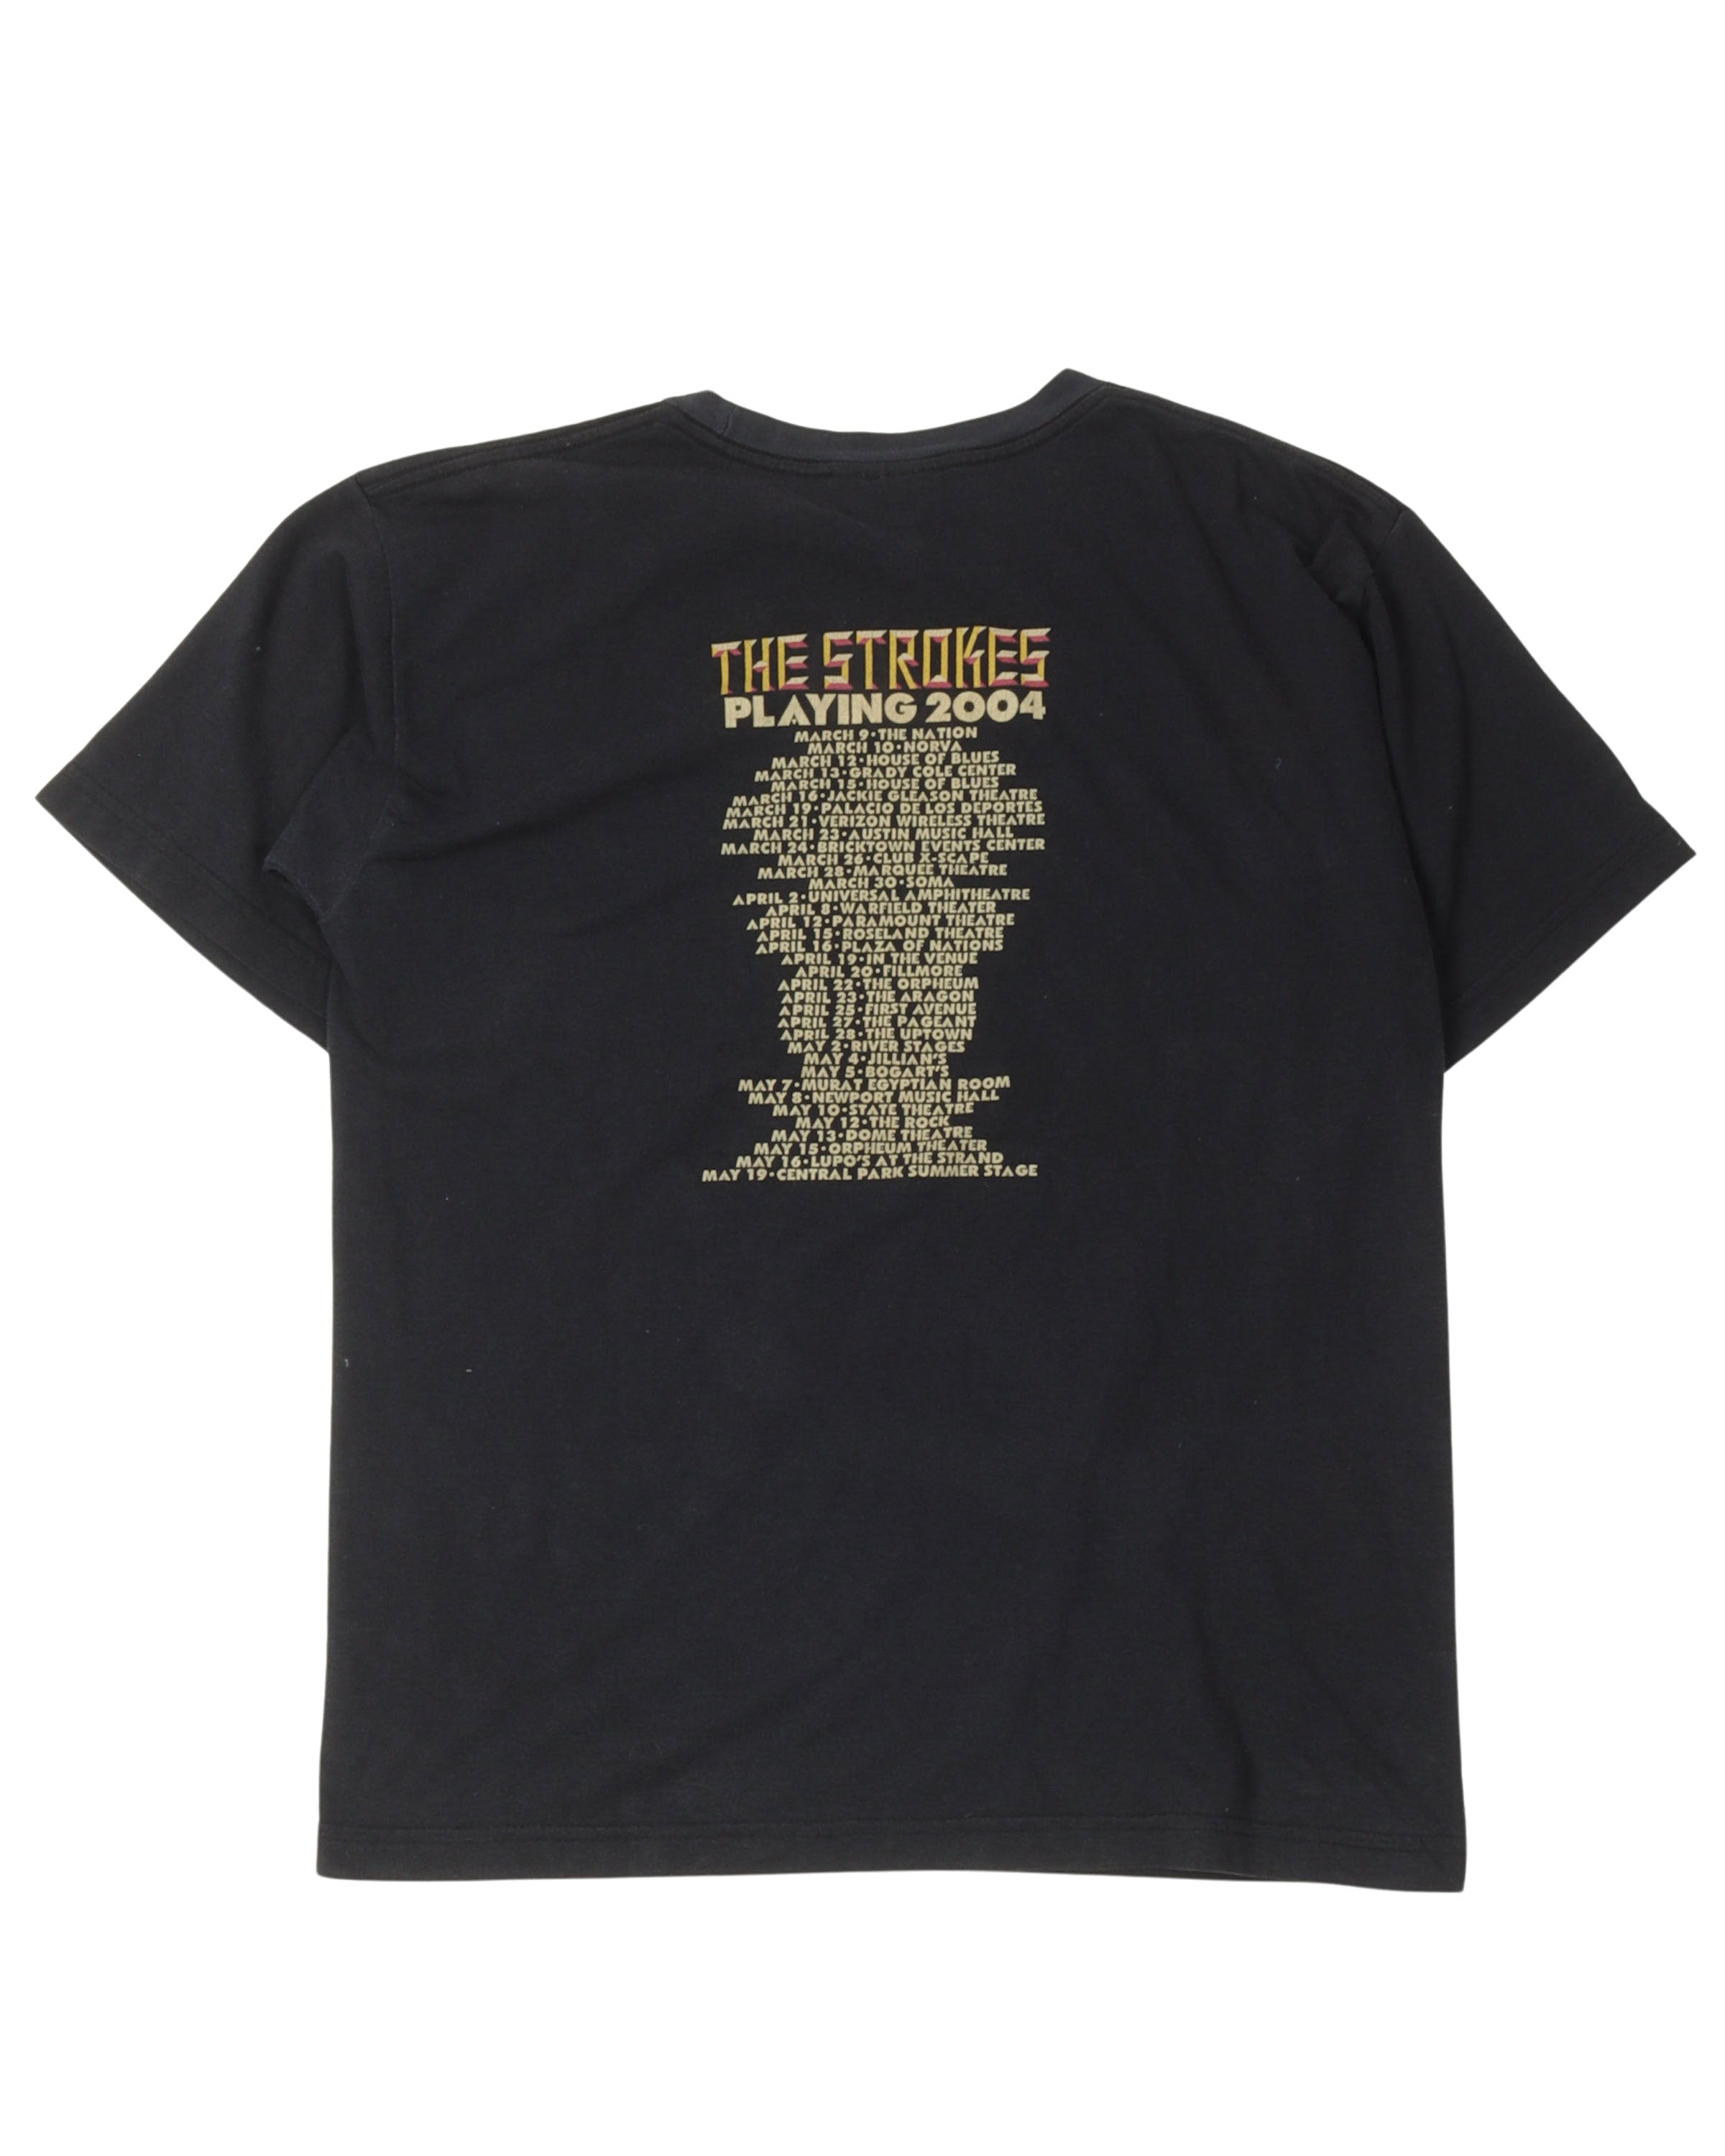 The Strokes Tour T-Shirt